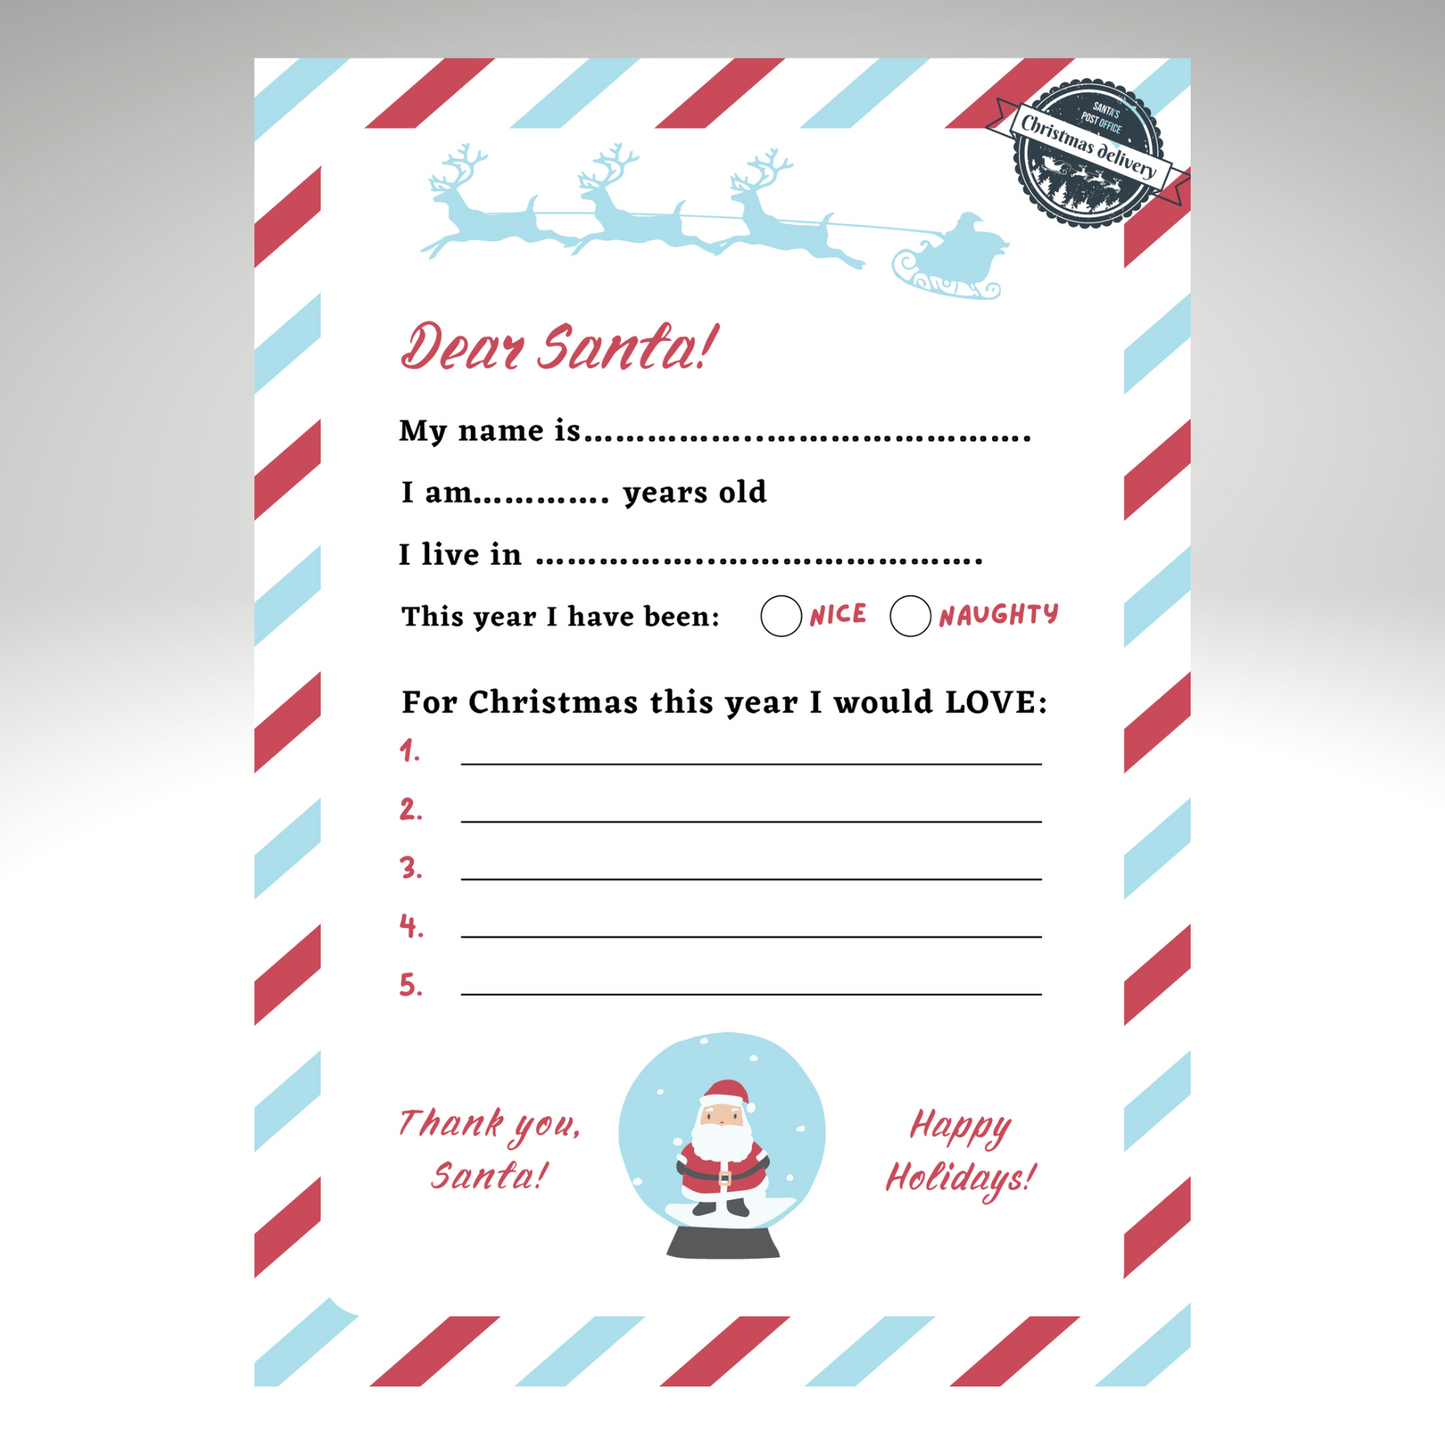 Dear Santa Letter Downloadable A4 or A5 Santa Letter   